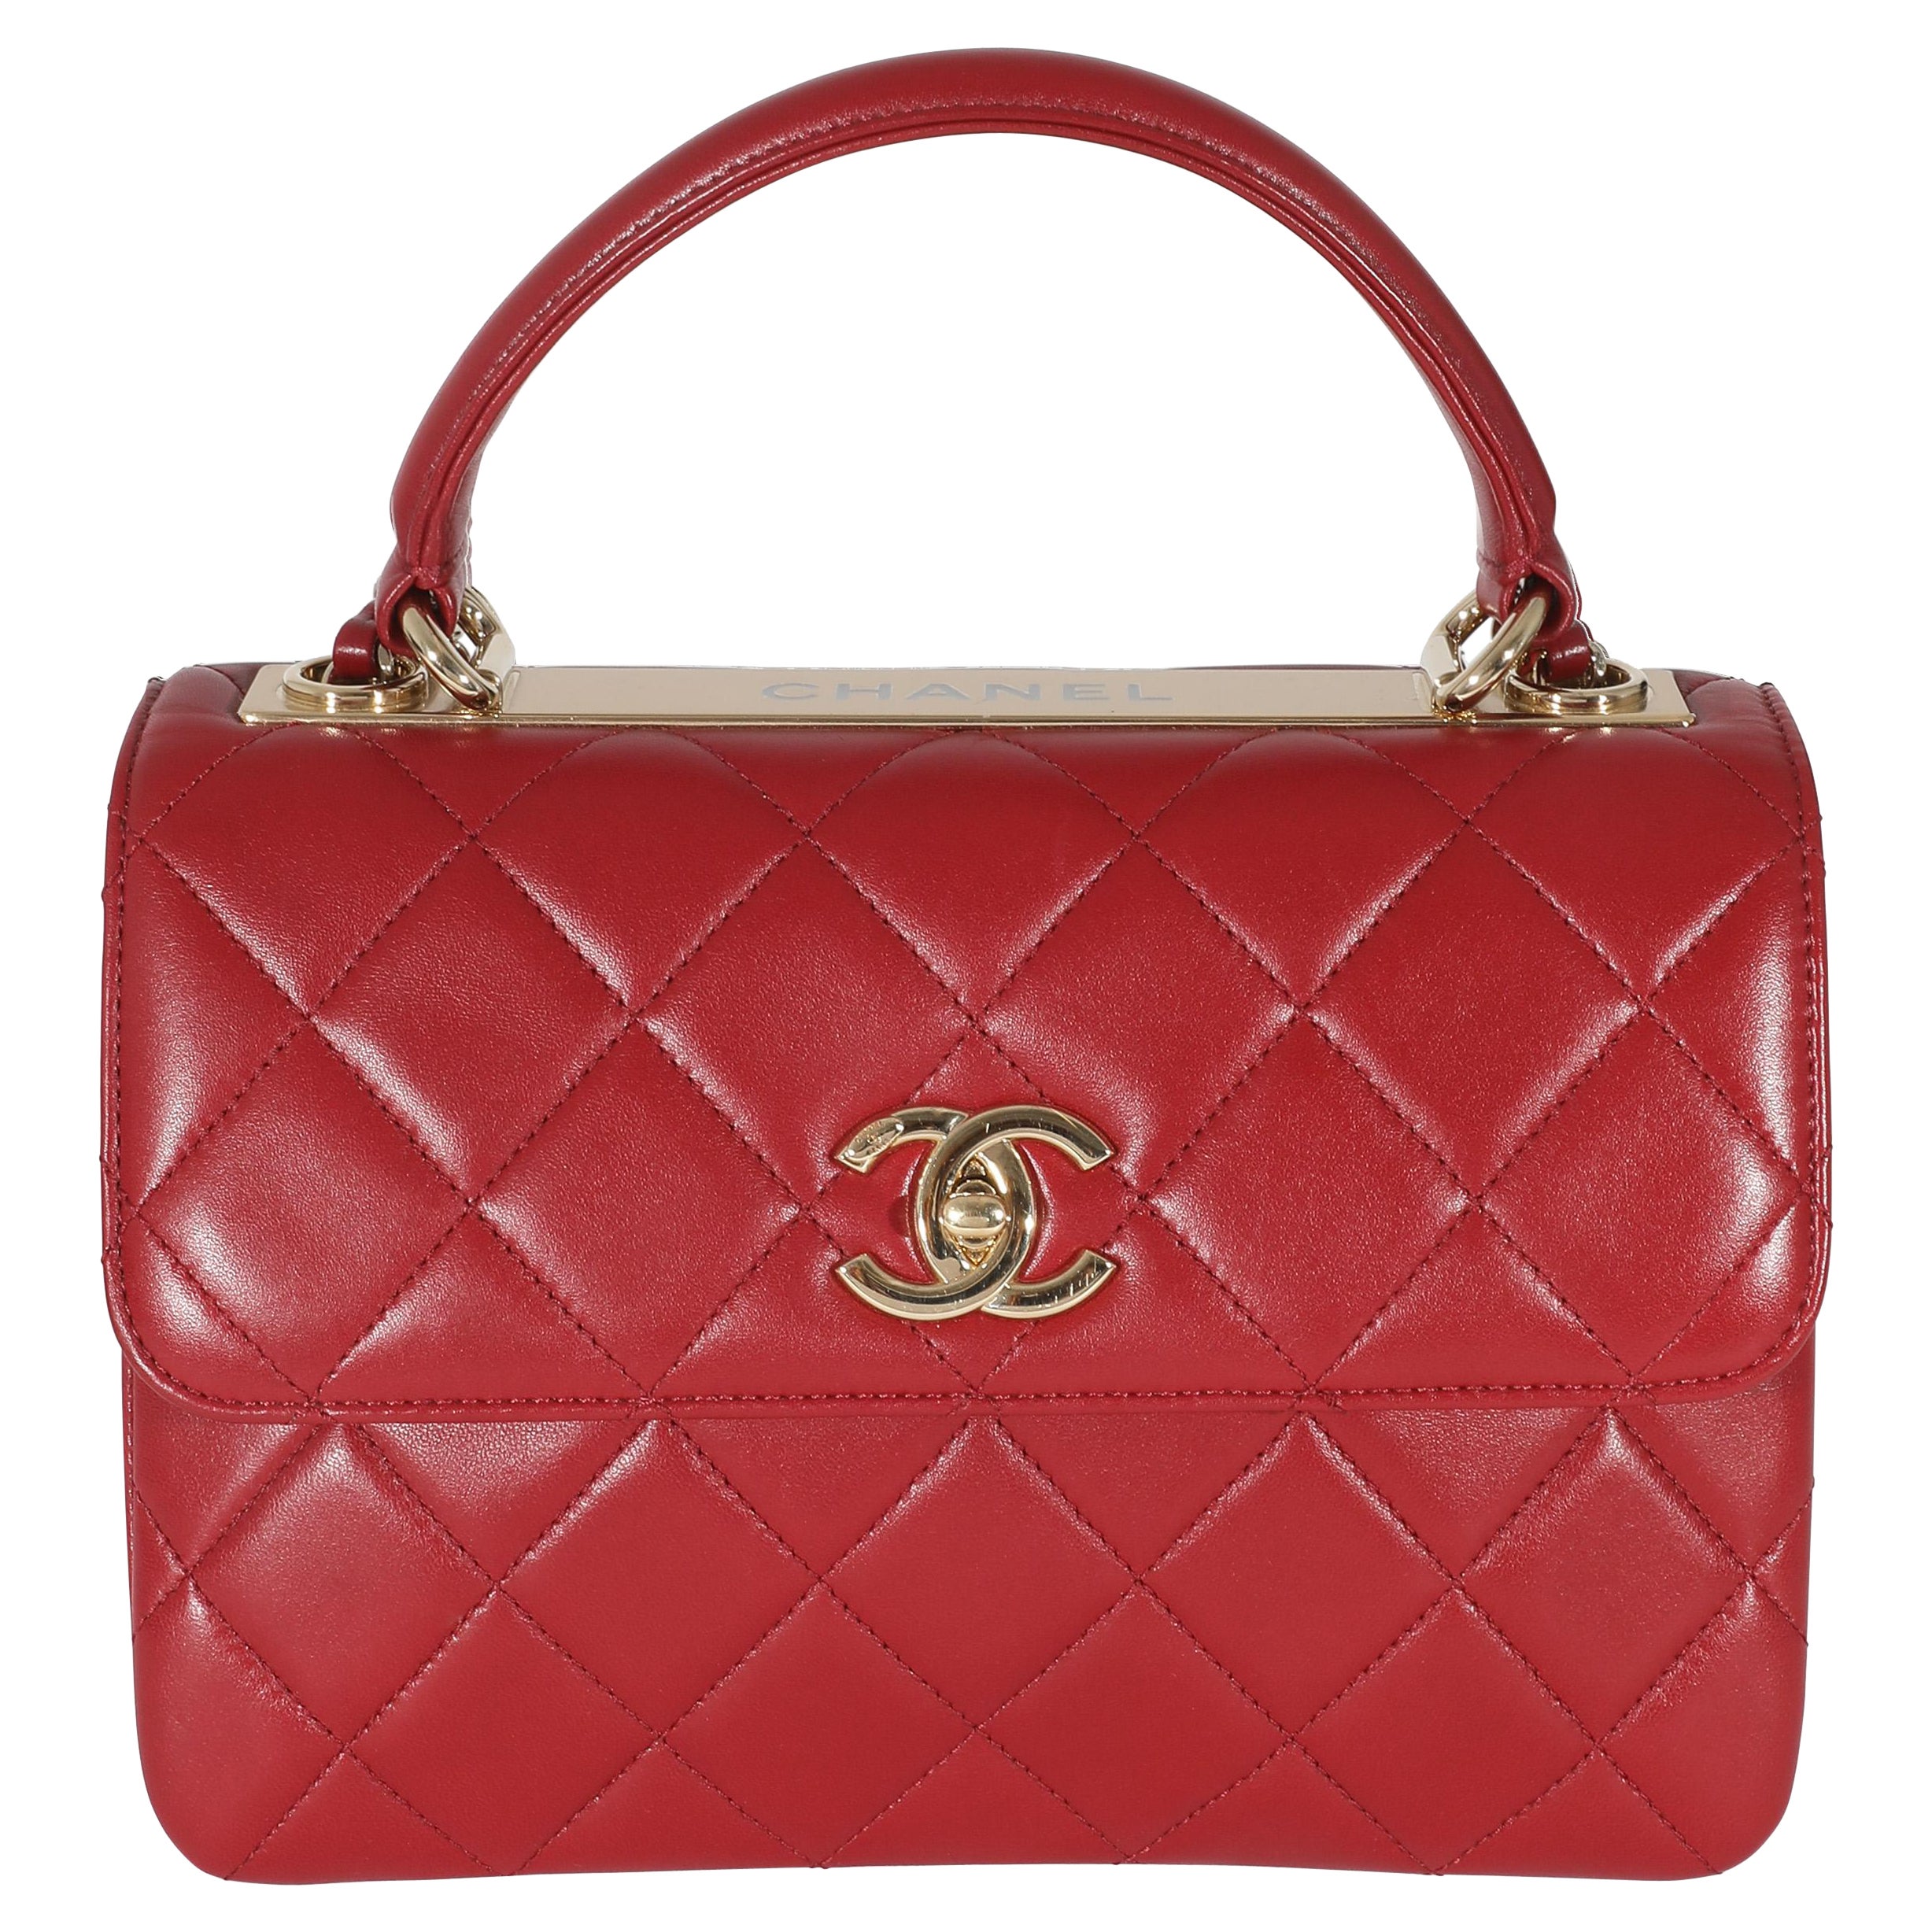 Chanel Burgandy Small Trendy Flap Bag